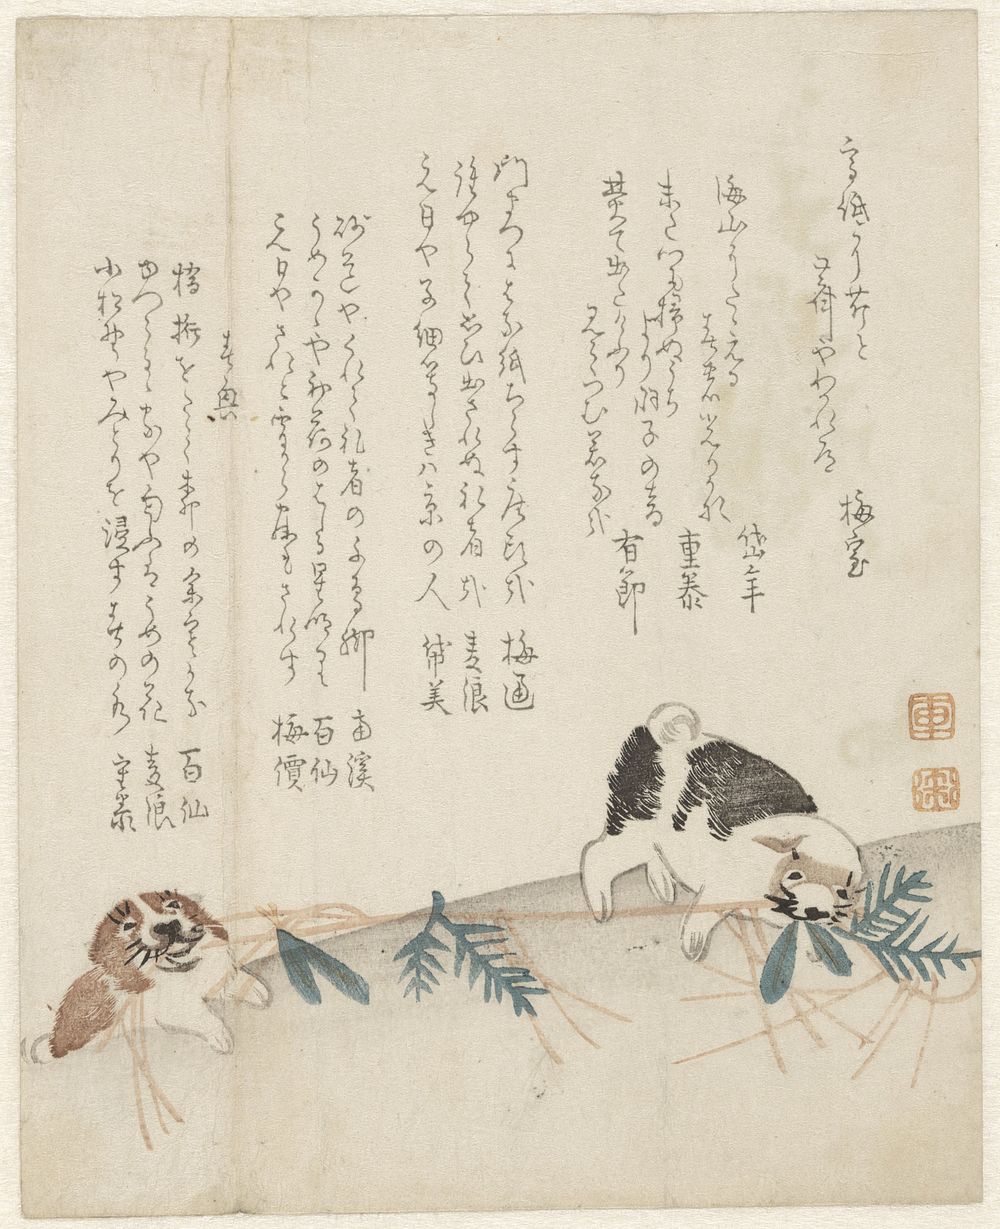 Twee hondjes (1800 - 1900) by anonymous